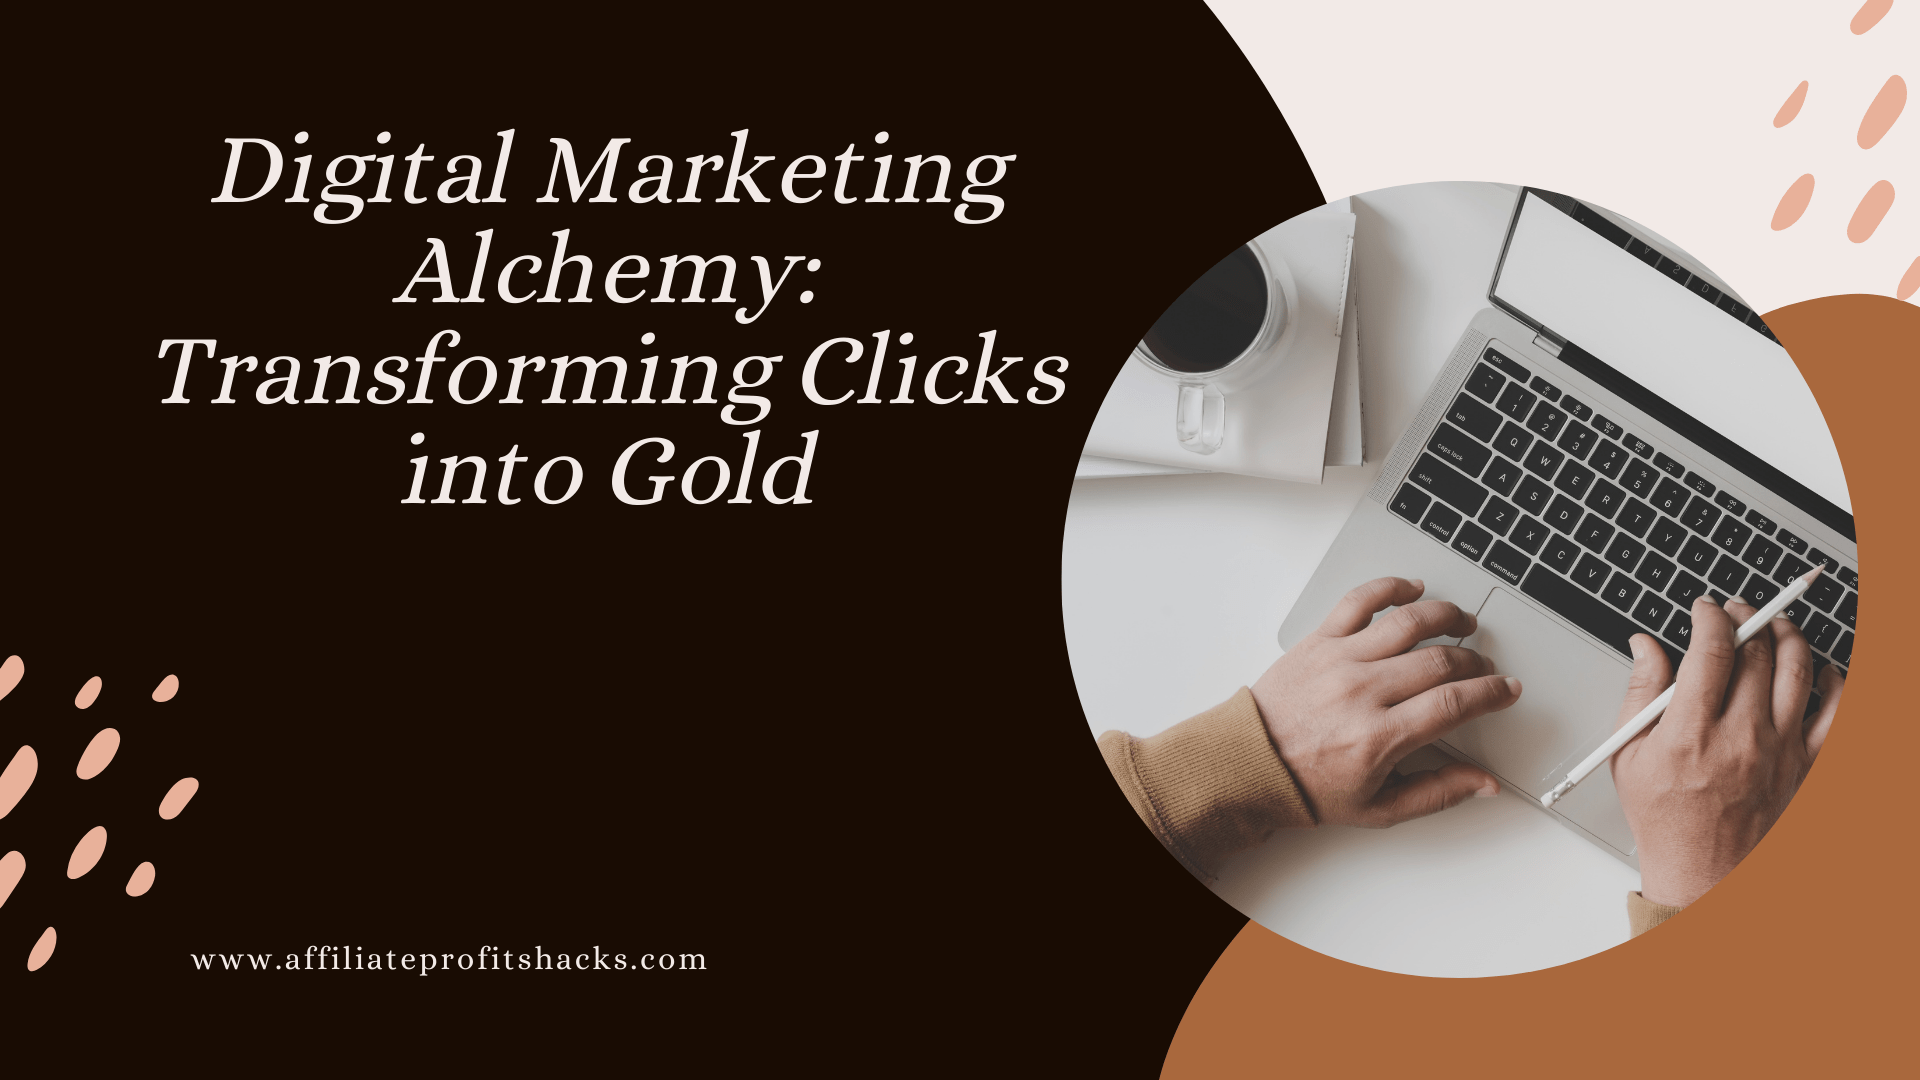 Digital Marketing Alchemy: Transforming Clicks into Gold